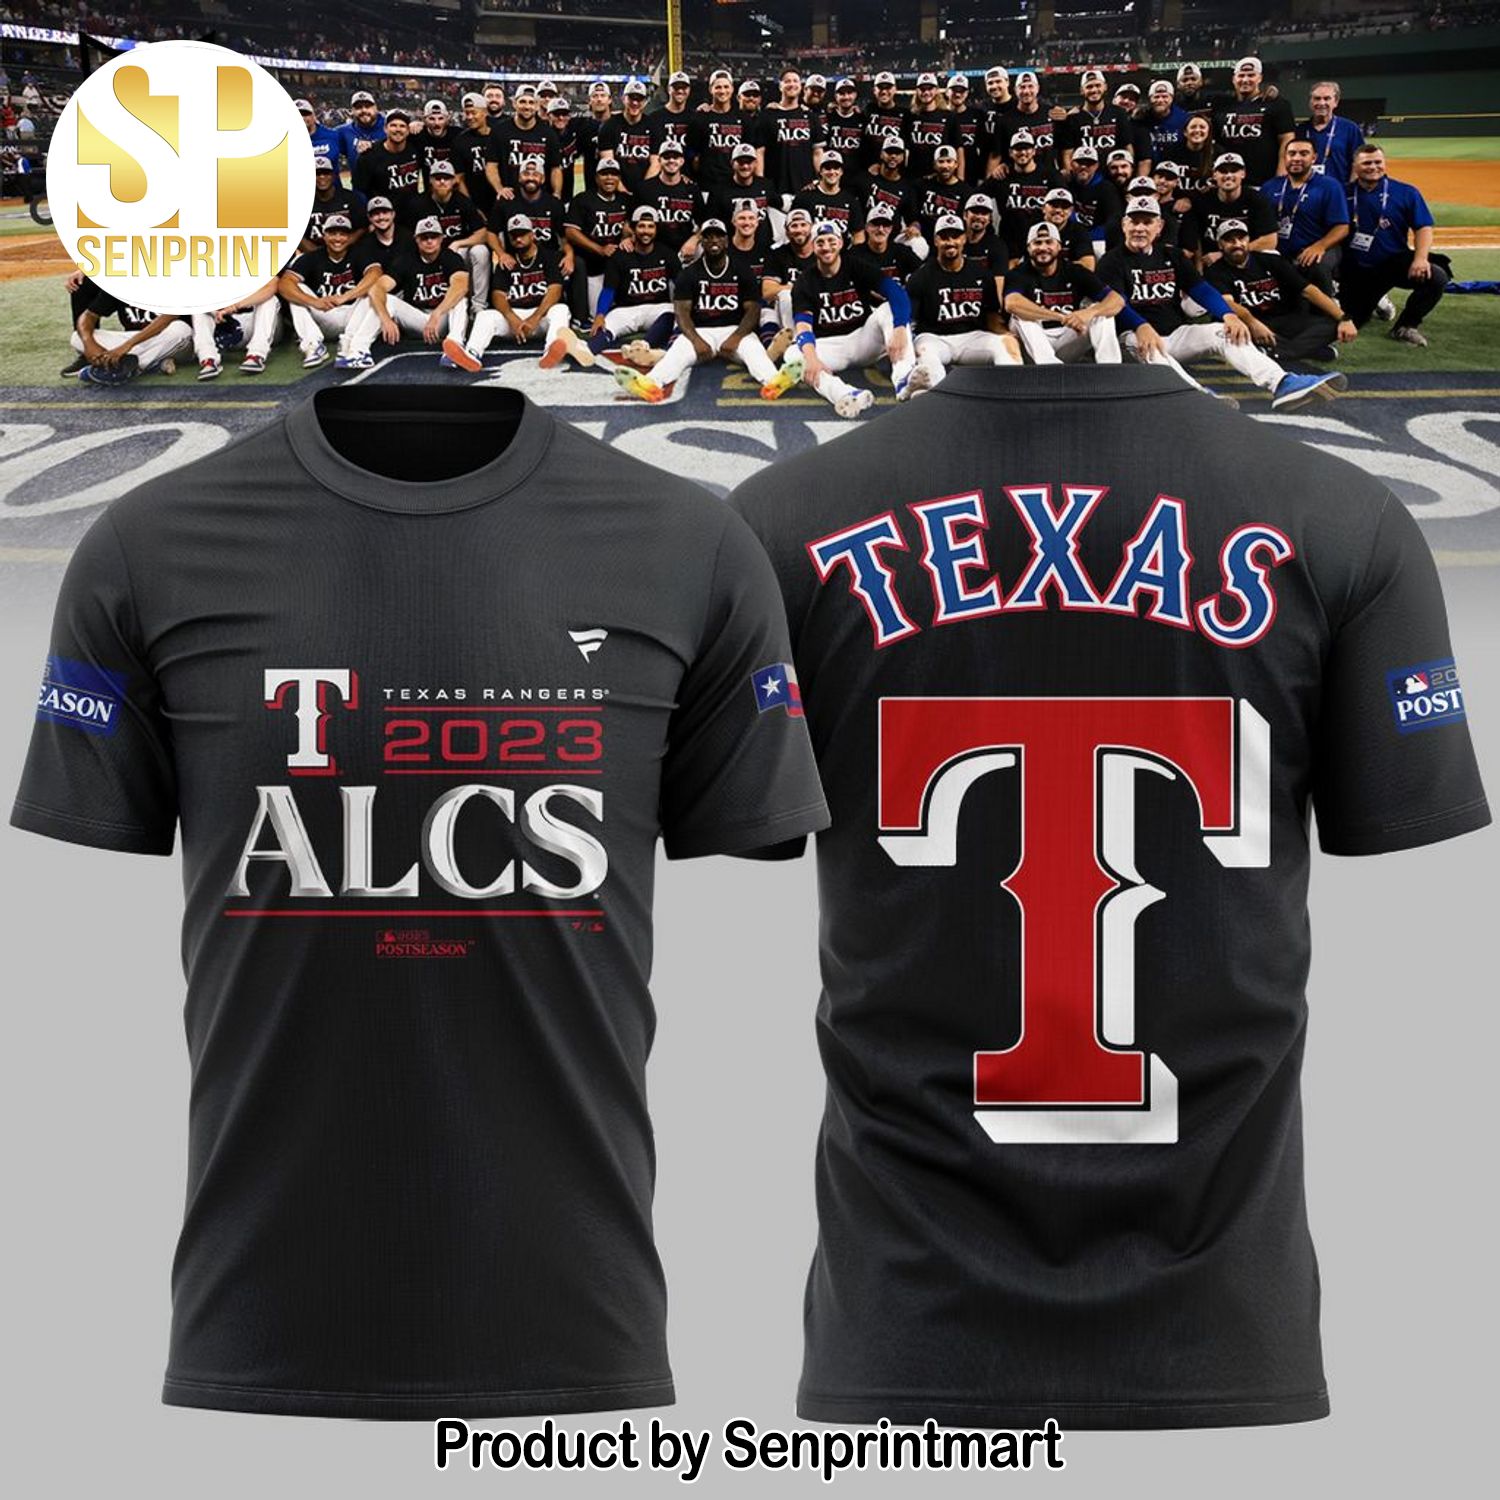 Texas Ranger 2023 ALCS Postseason 3D Full Printing Shirt